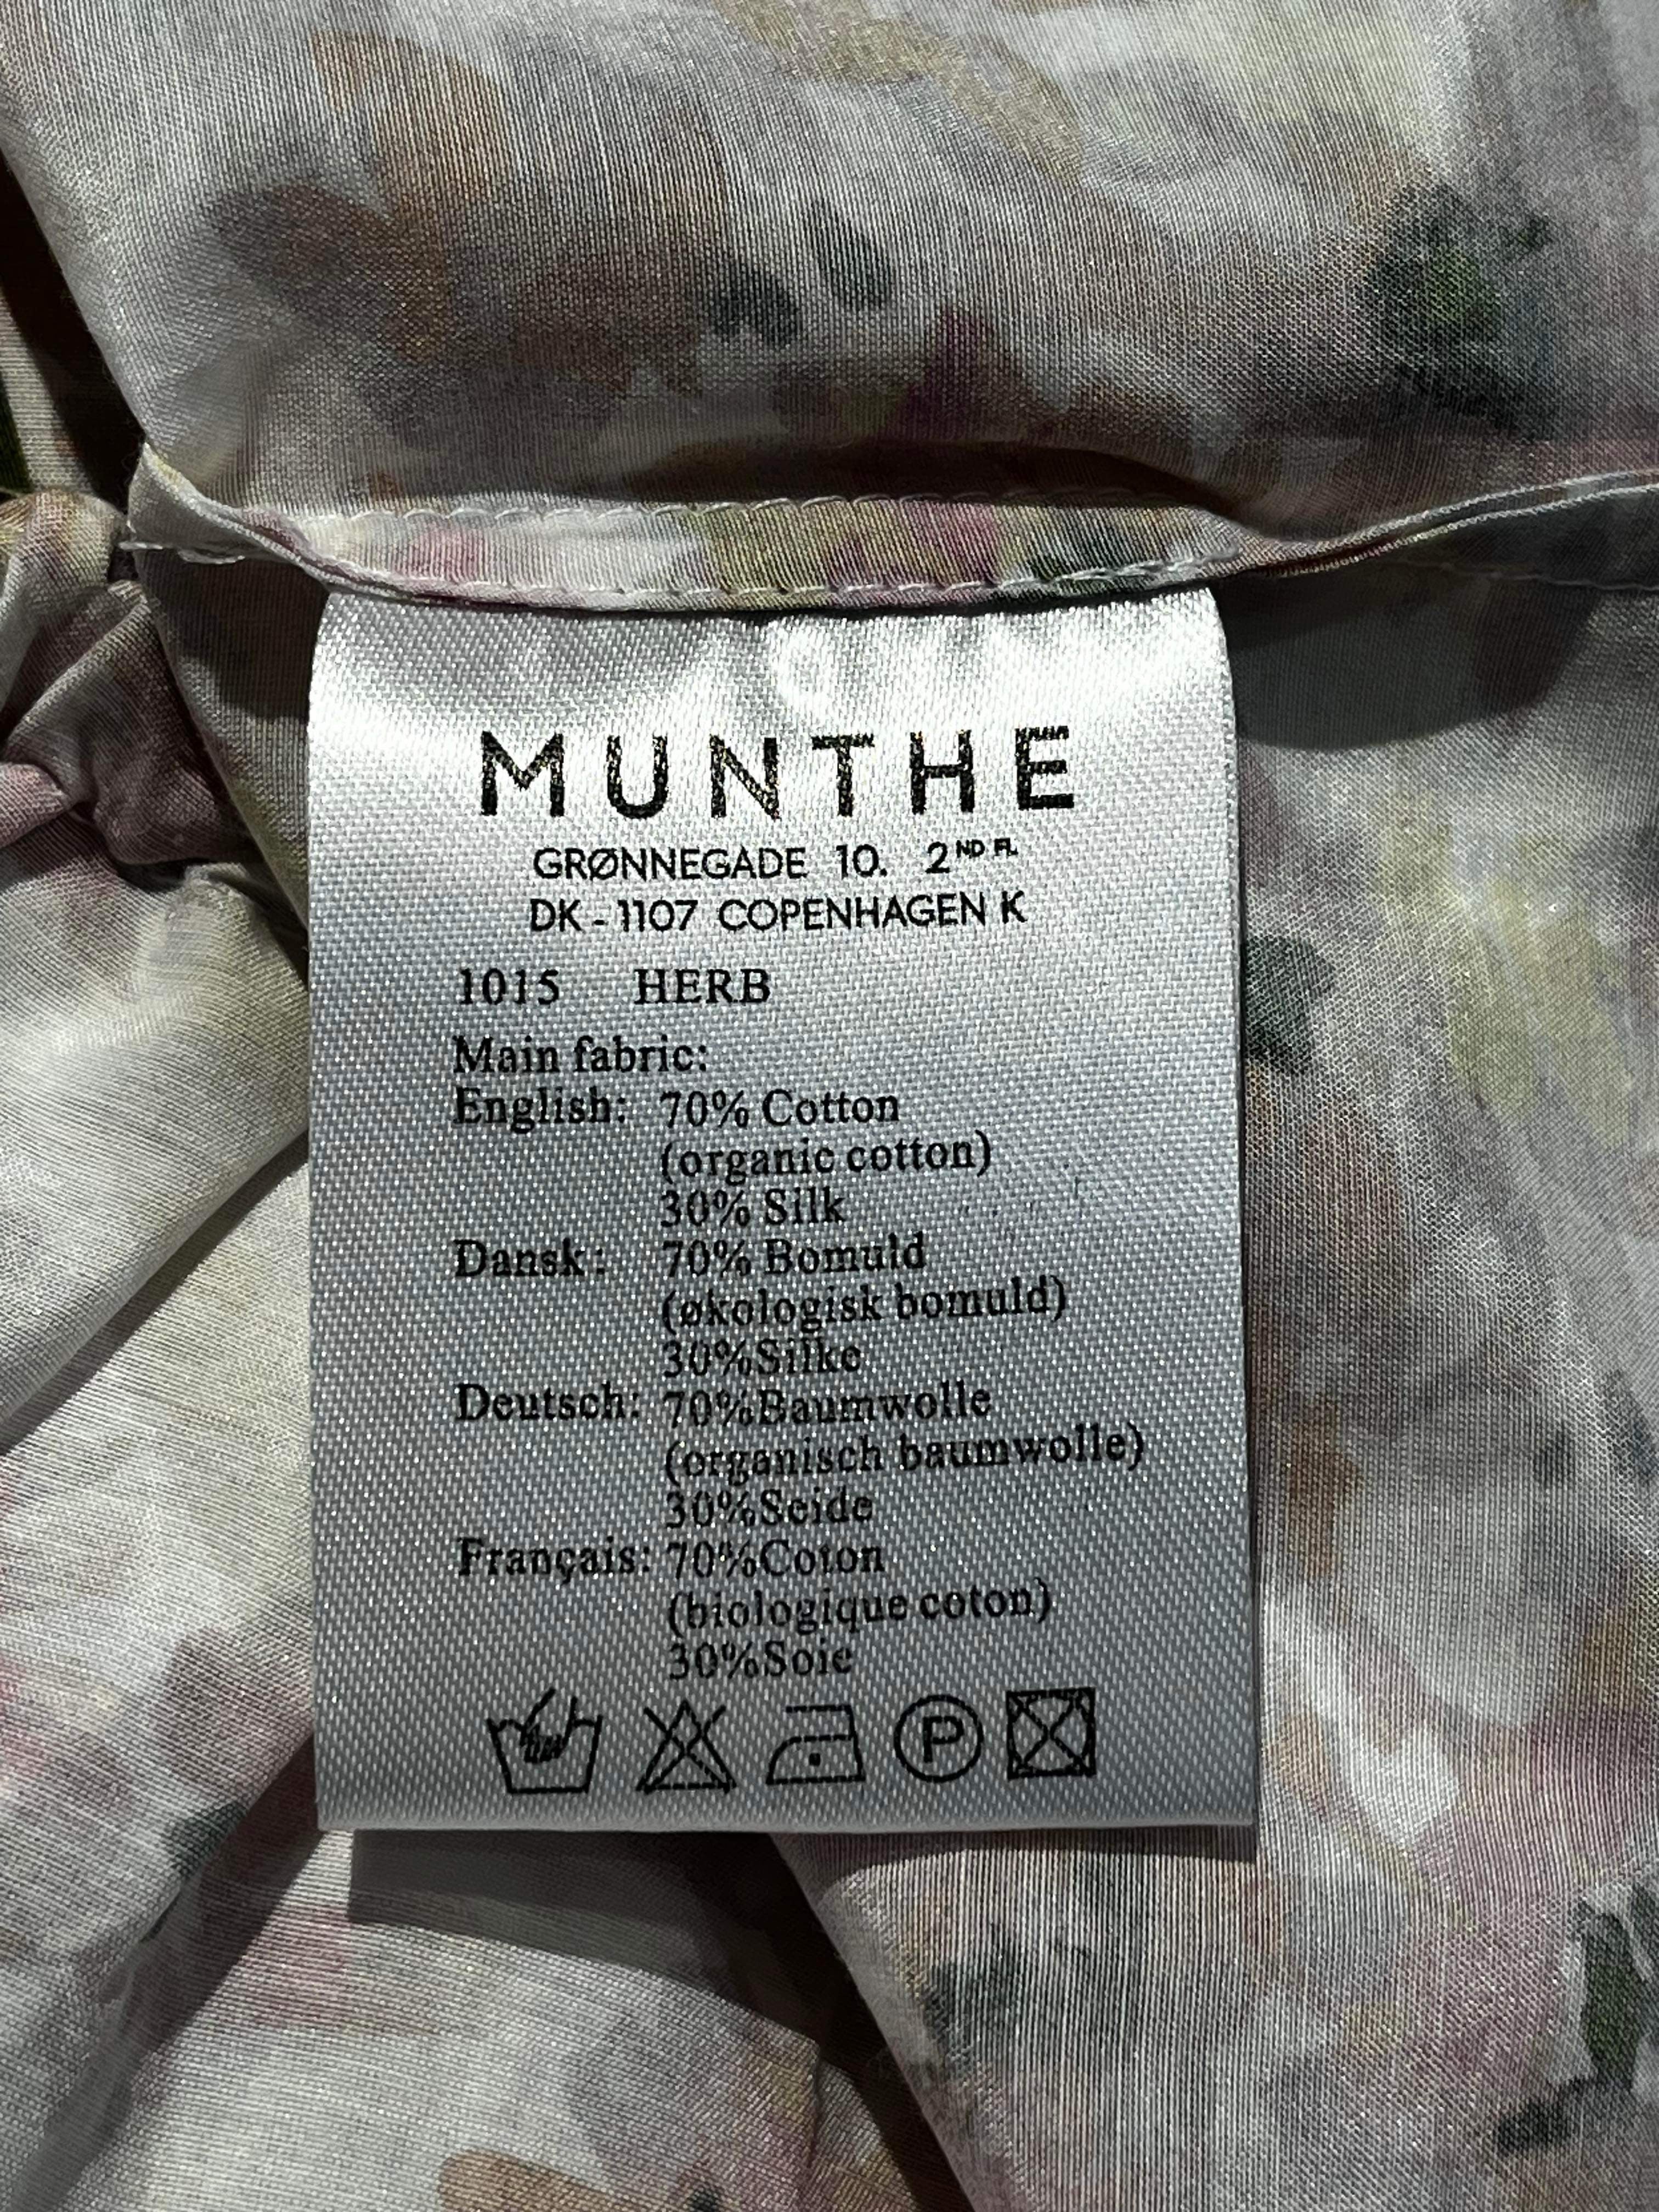 Munthe - Top - Size: 40